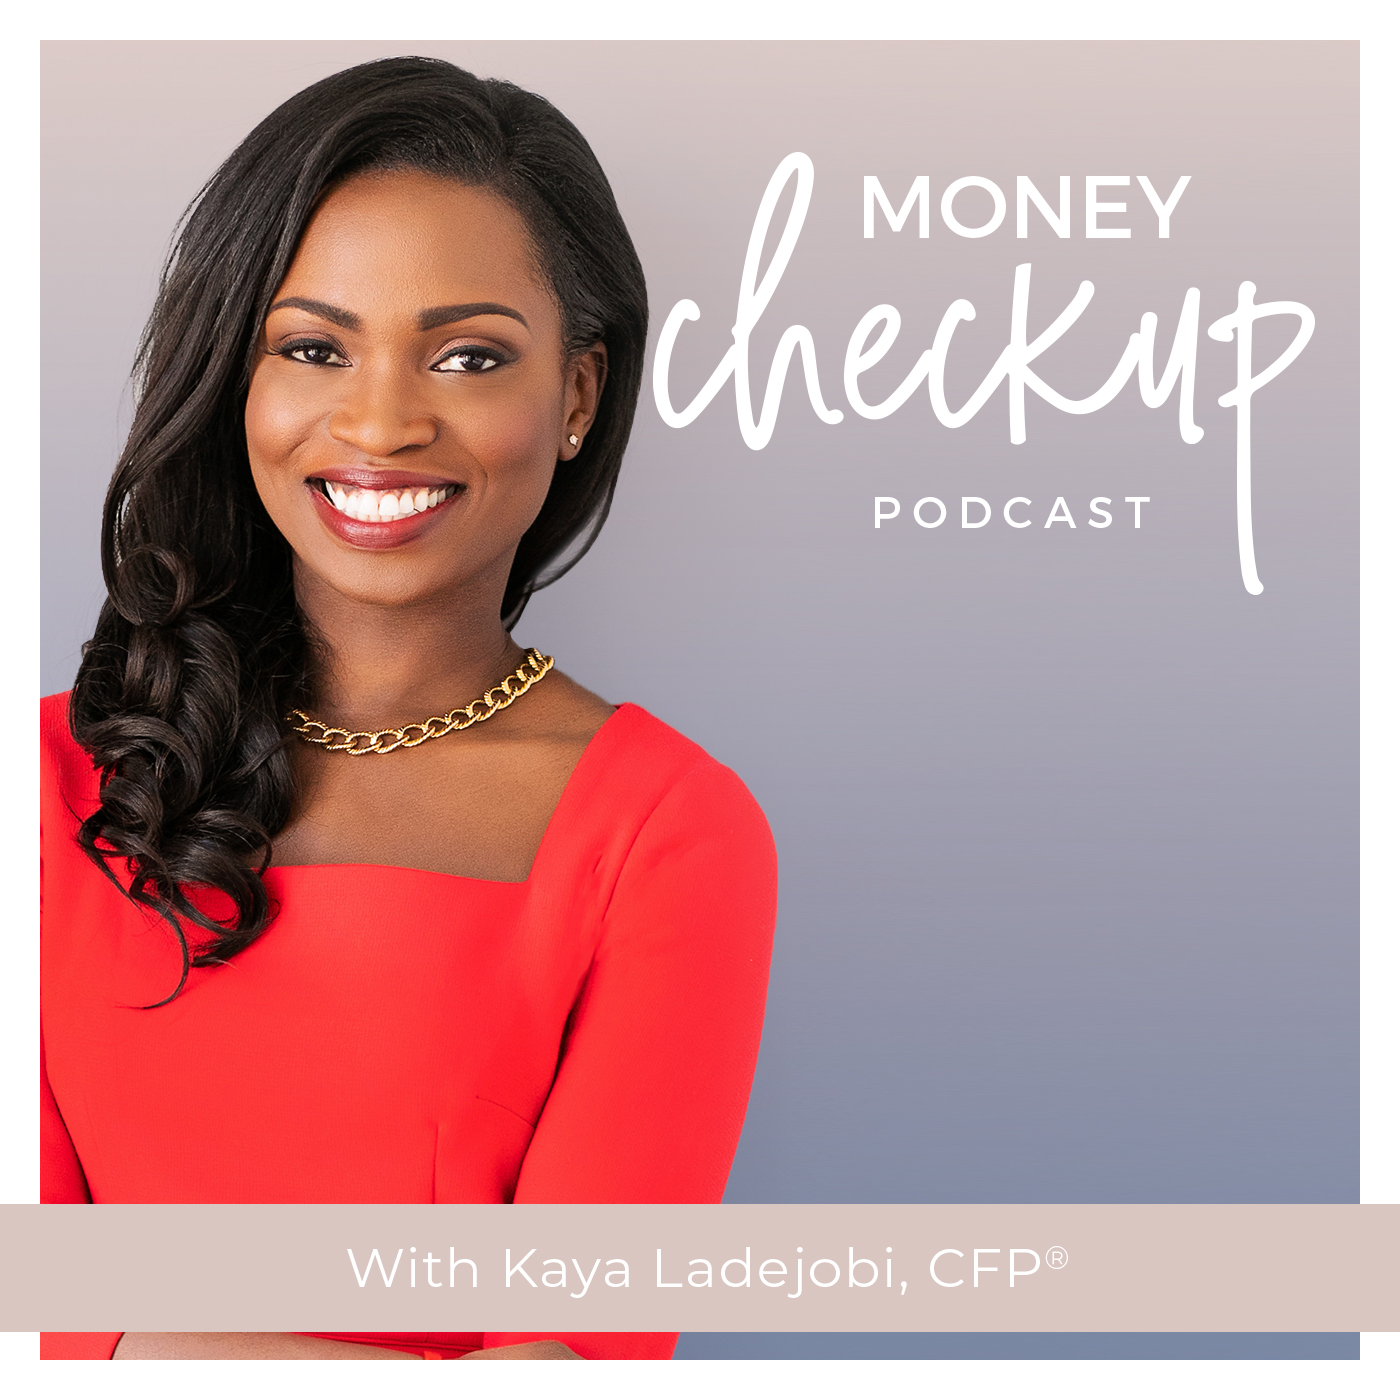 Money Checkup Podcast With Kaya Ladejobi